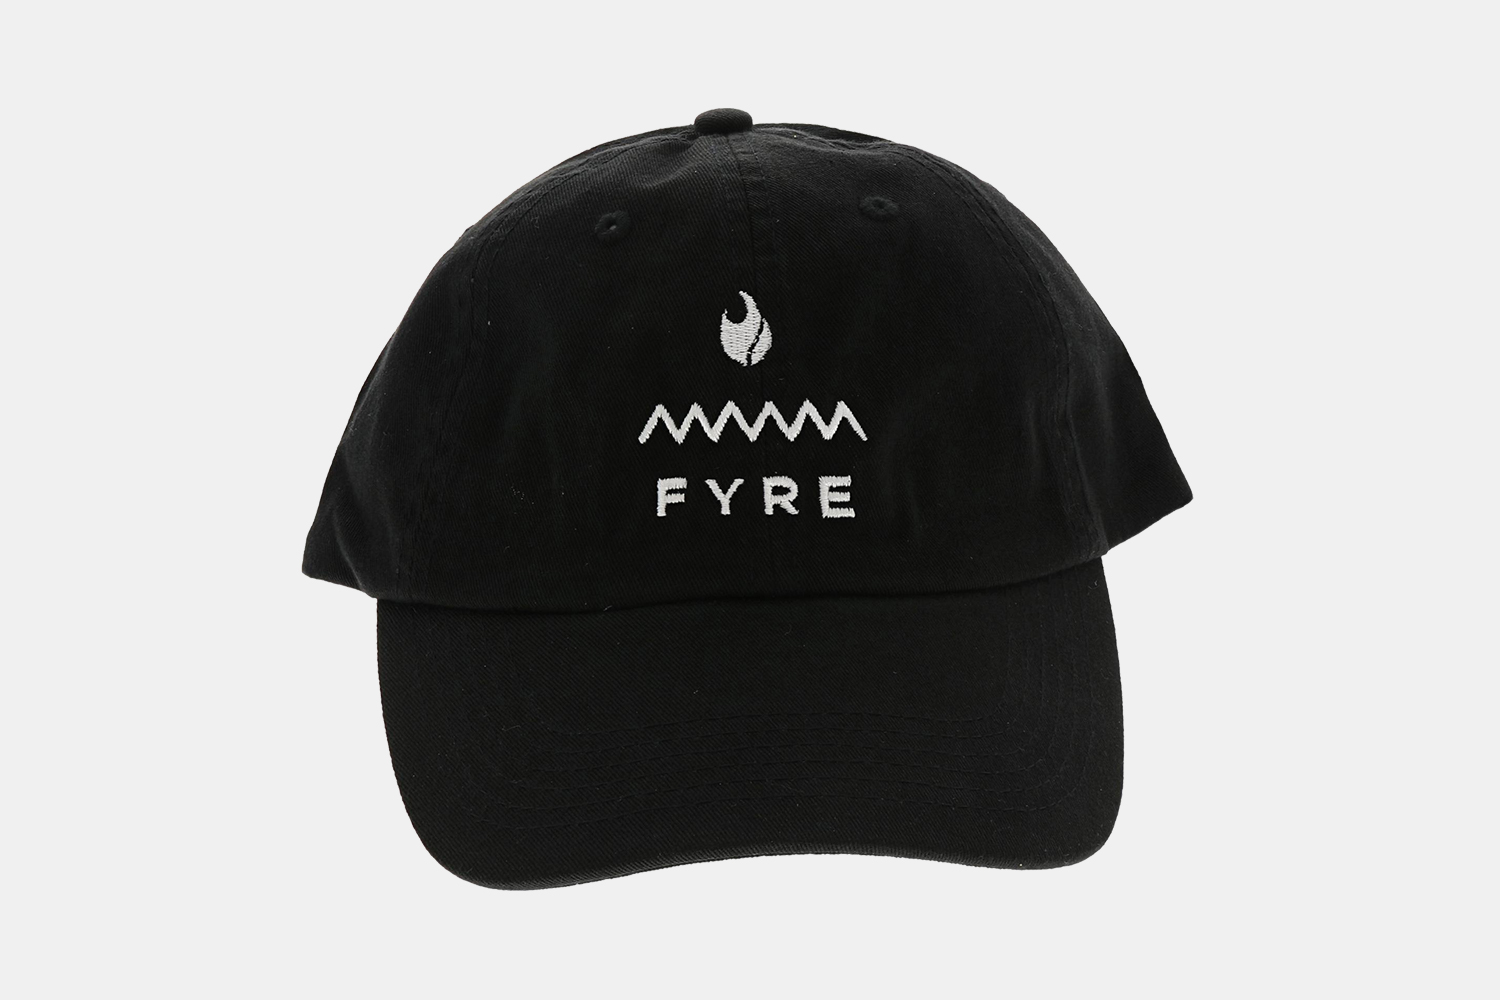 Fyre Festival hat up for auction